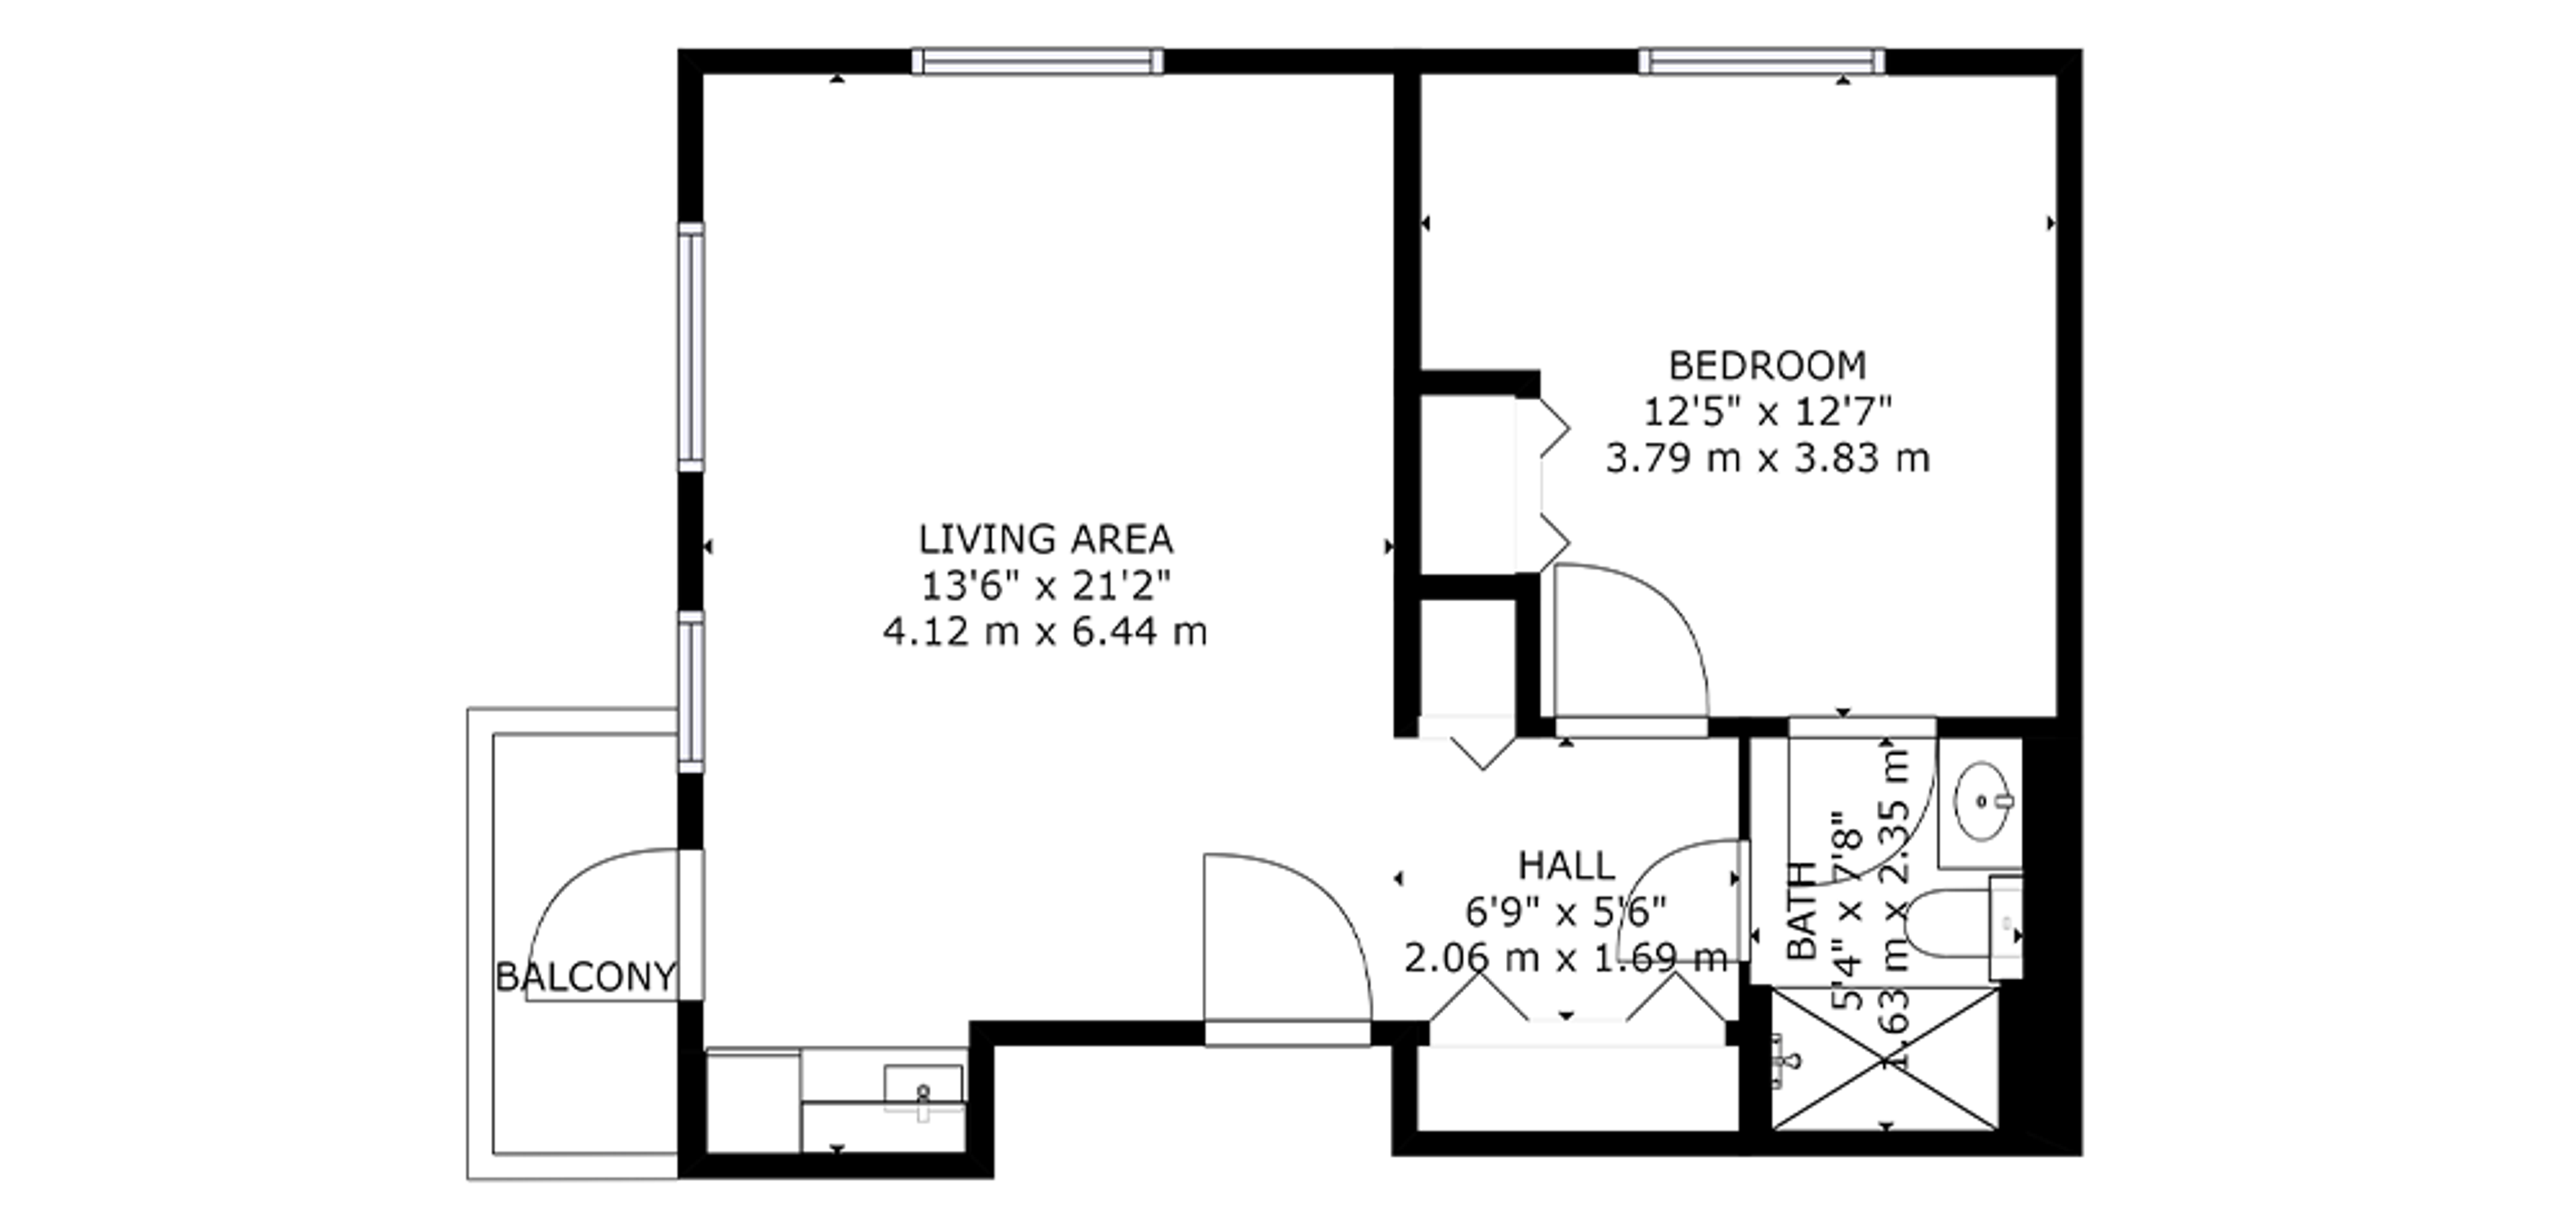 The Bentley Hillsdale Sample Bedroom Plan B Image